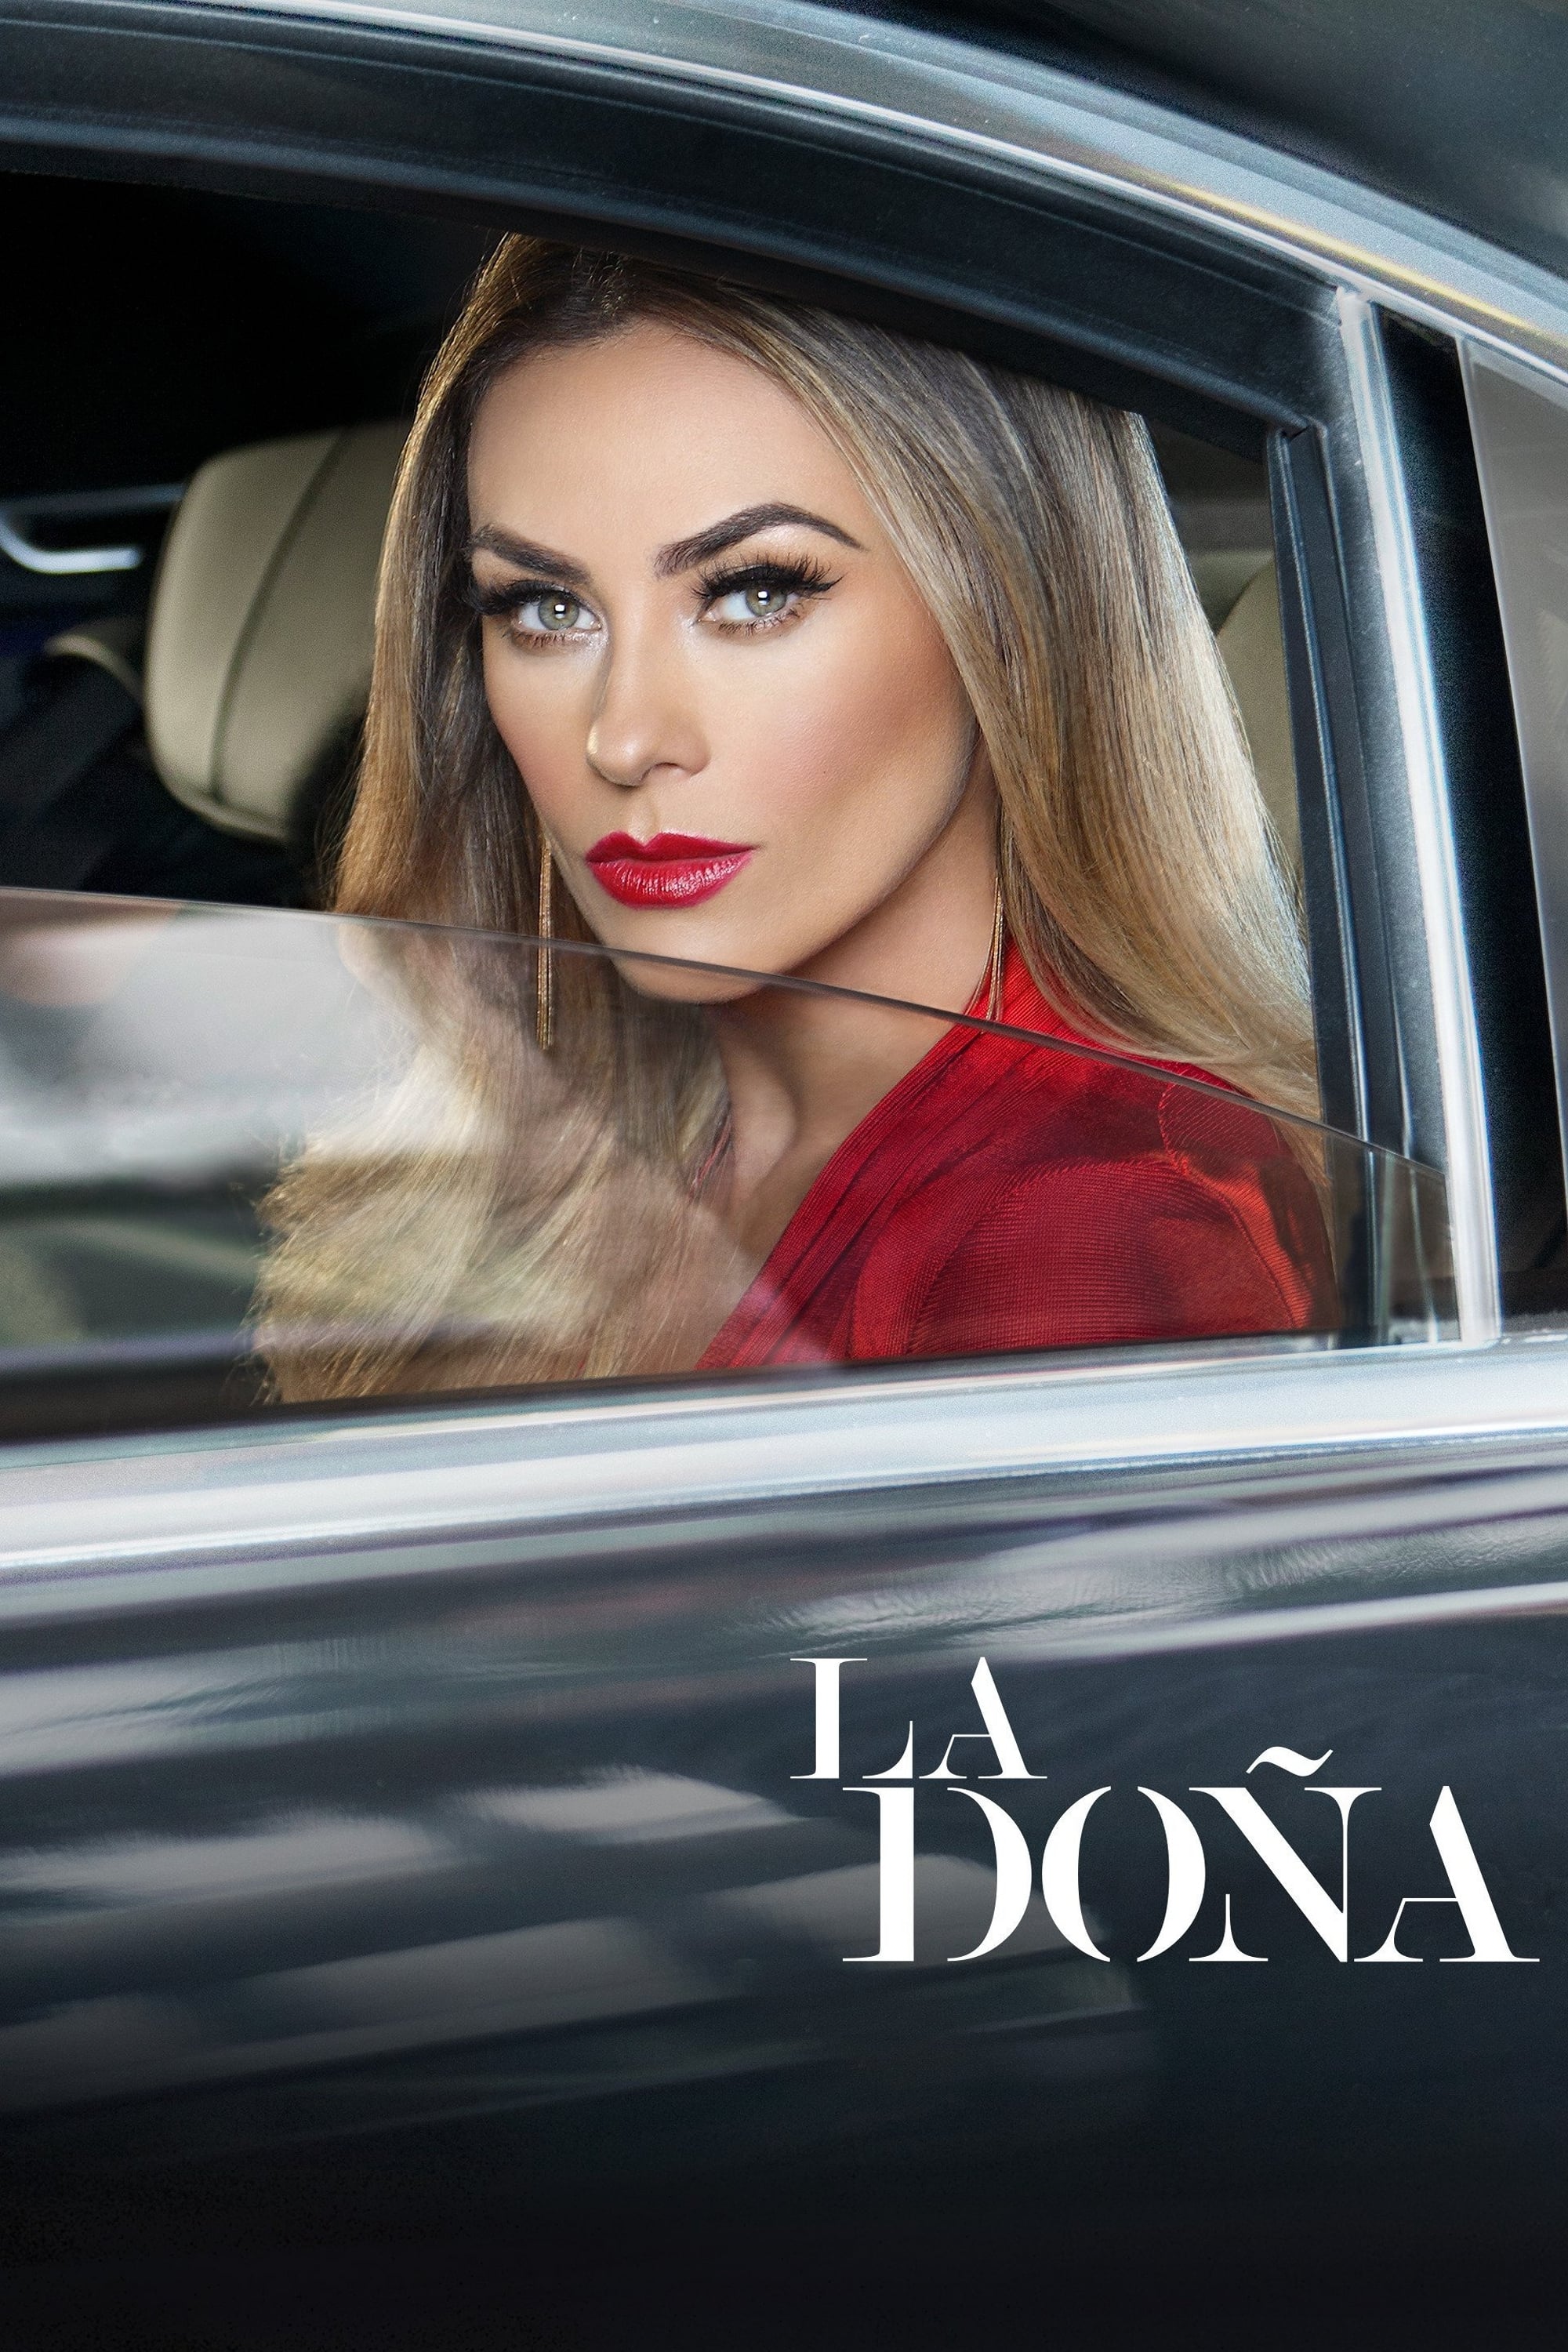 La Doña (2016)